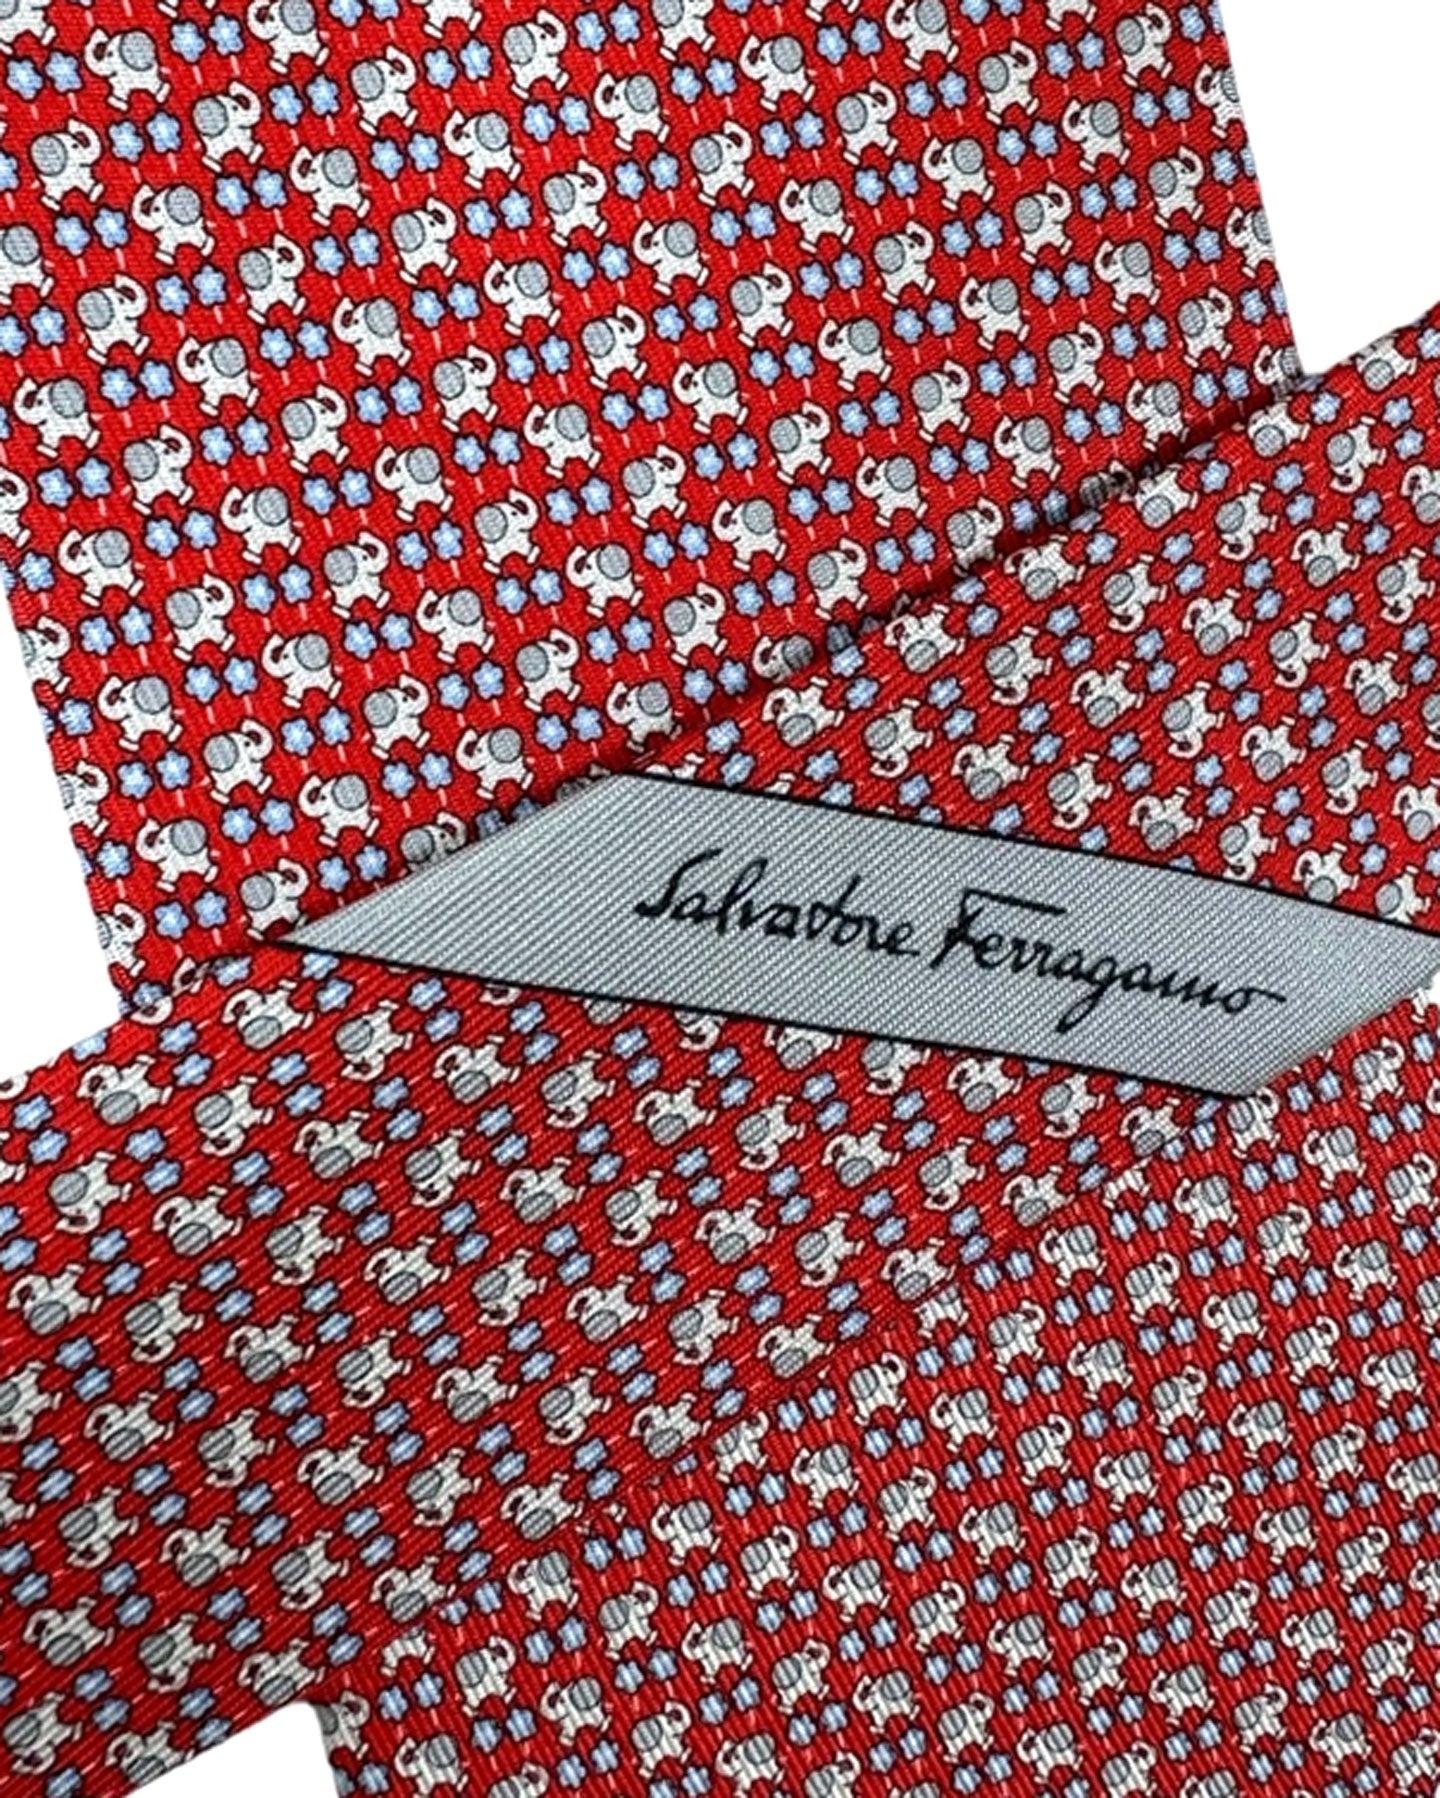 Salvatore Ferragamo Tie Red Novelty Elephant Design